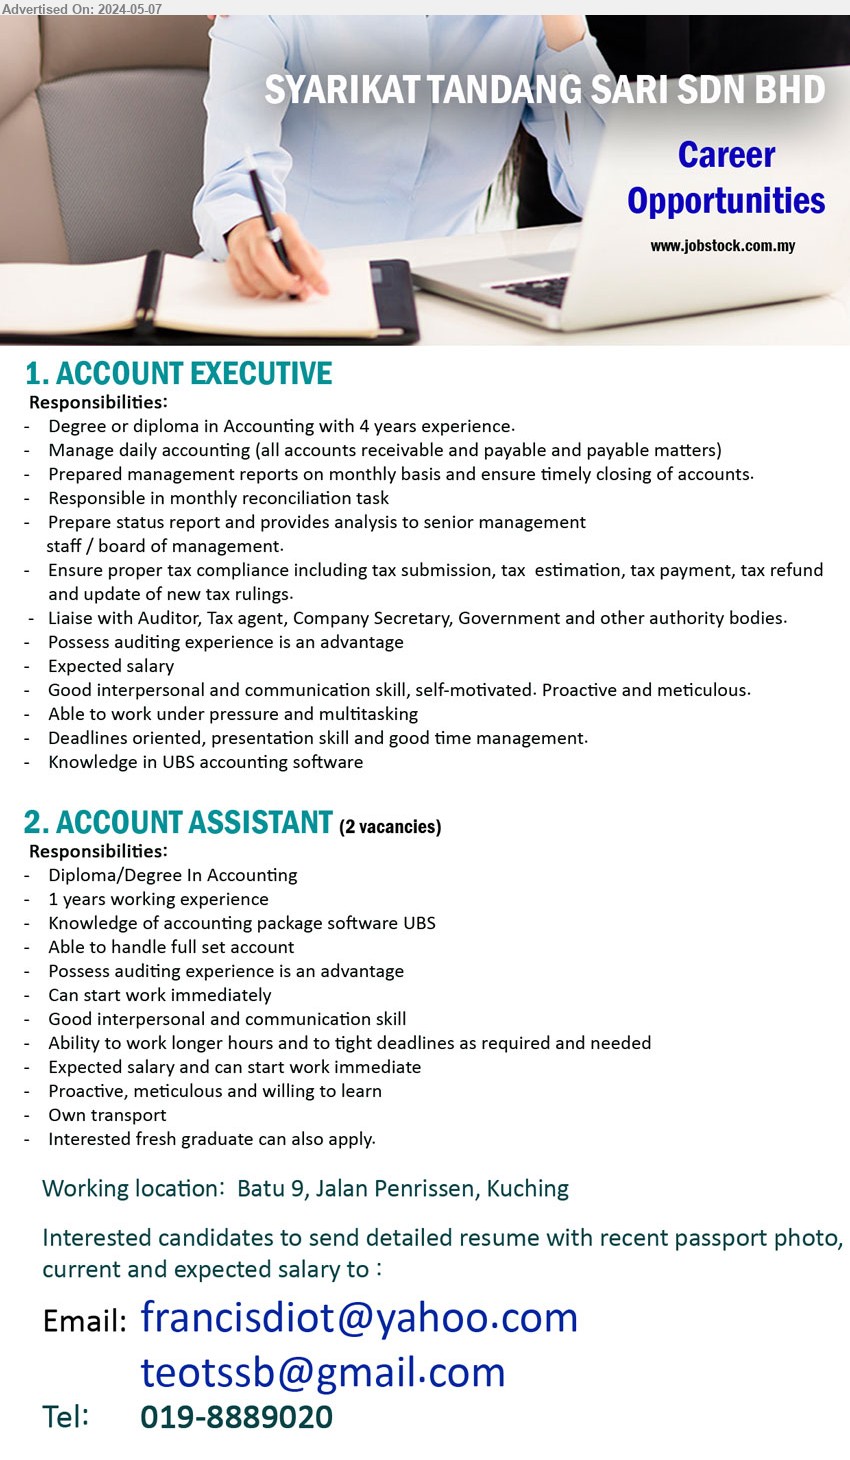 SYARIKAT TANDANG SARI SDN BHD - 1. ACCOUNT EXECUTIVE (Kuching), Degree or Diploma in Accounting with 4 years experience,...
2. ACCOUNT ASSISTANT (Kuching), Diploma/Degree In Accounting, 1 years working experience ,...
Call 019-8889020  / Email resume to ...